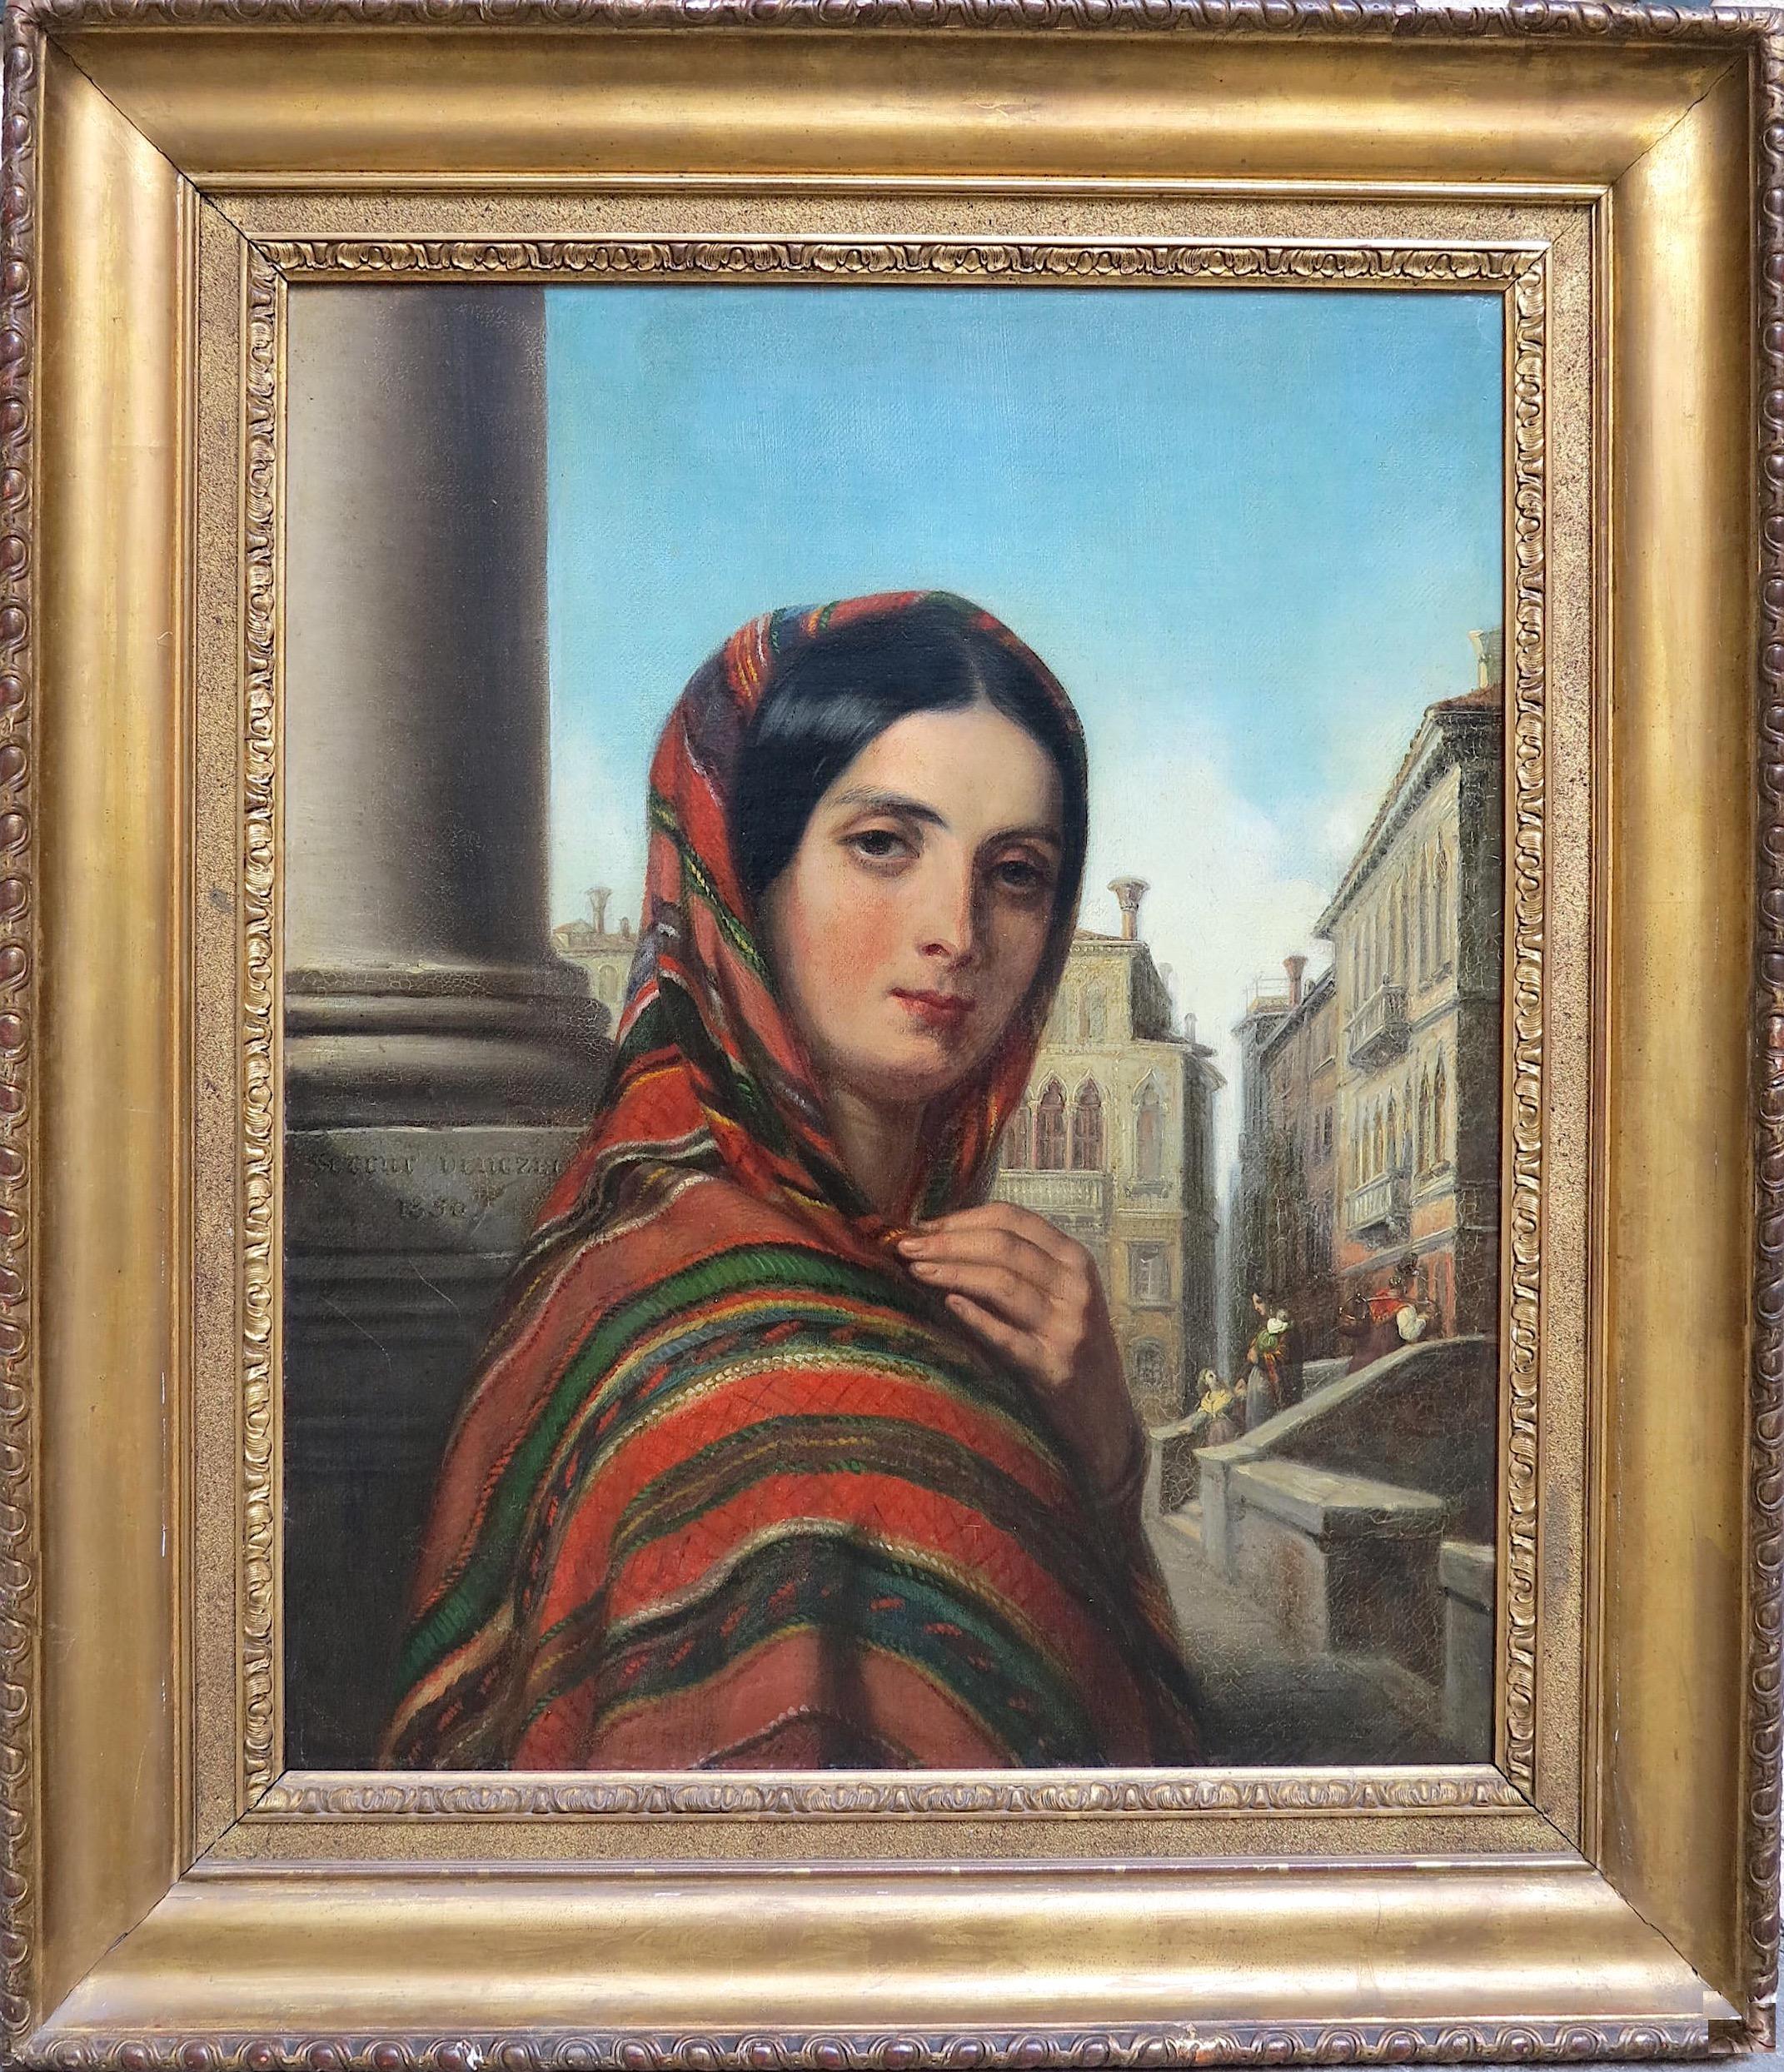 Henri SERRUR Figurative Painting - People's woman of Venice, Italy